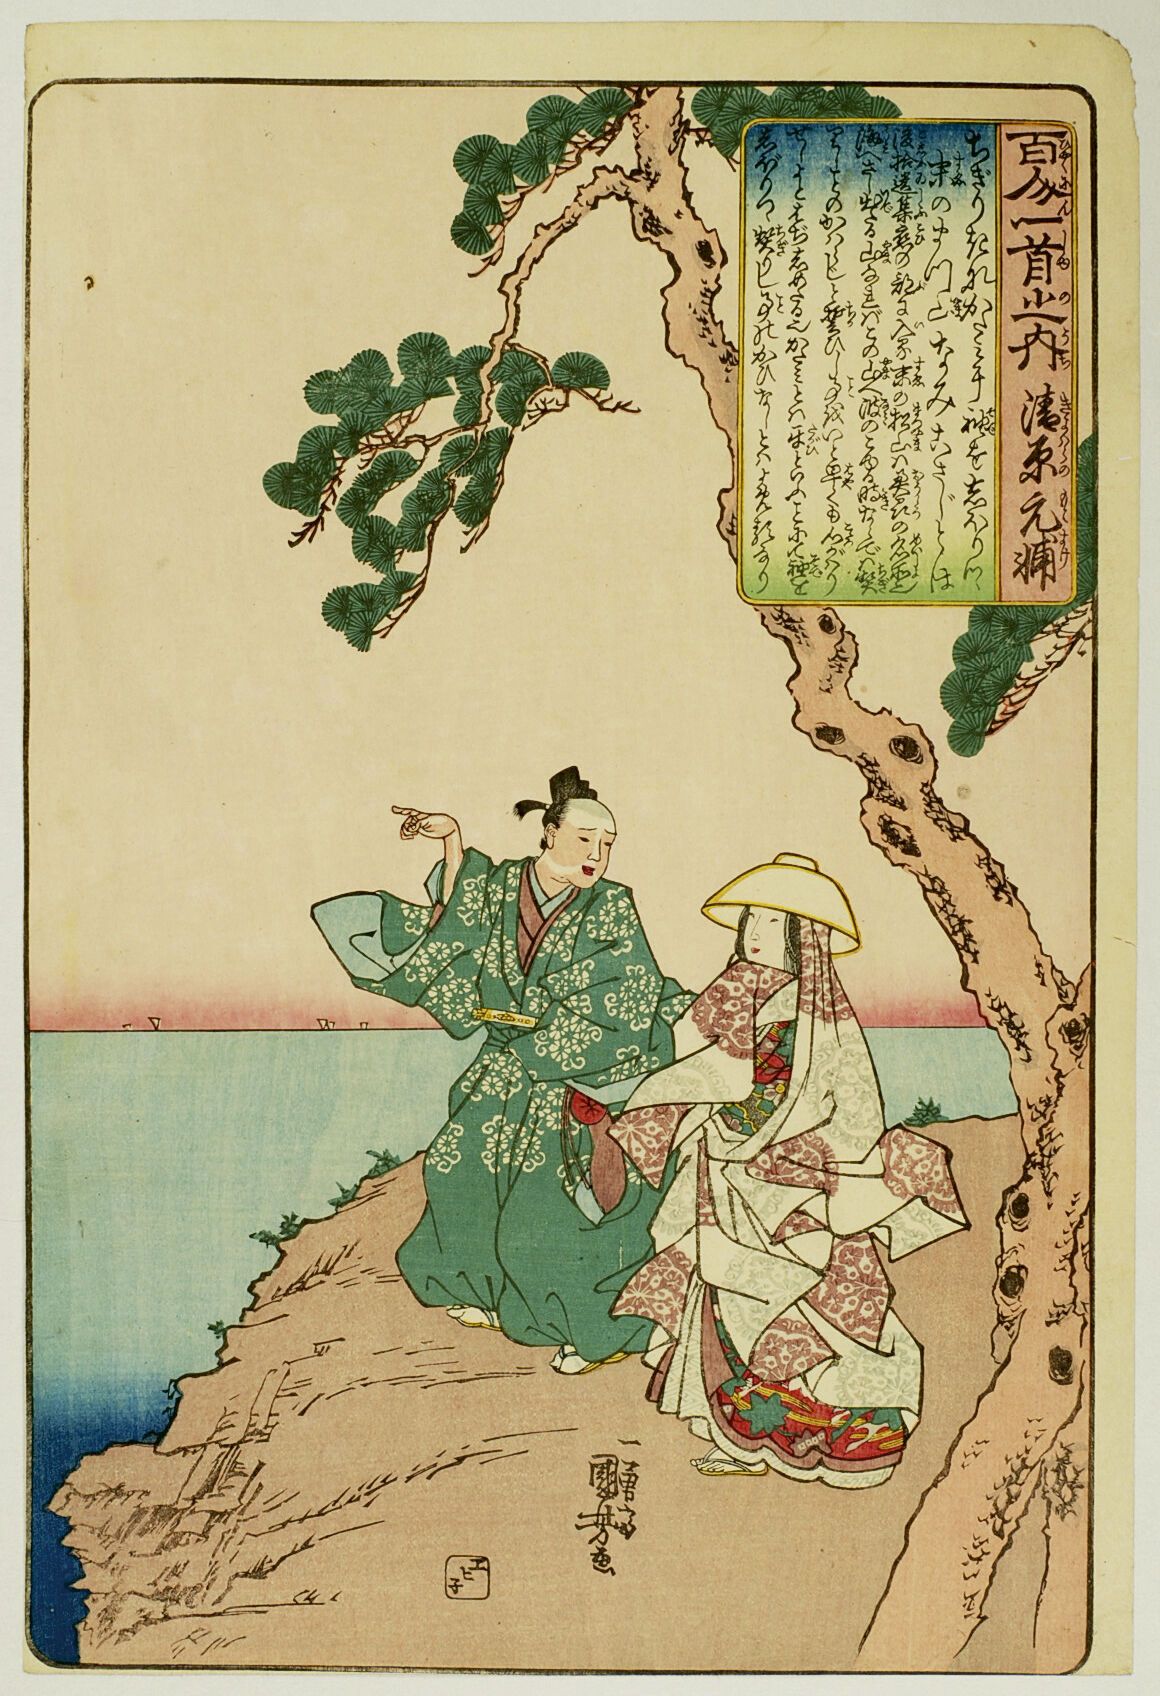 Null 宇多川国义 (1797-1861)
百人一首》系列中的 "大板"（Oban tate-e），该系列是由一百位诗人创作的一百首诗，板块是清原之助，诗人和&hellip;